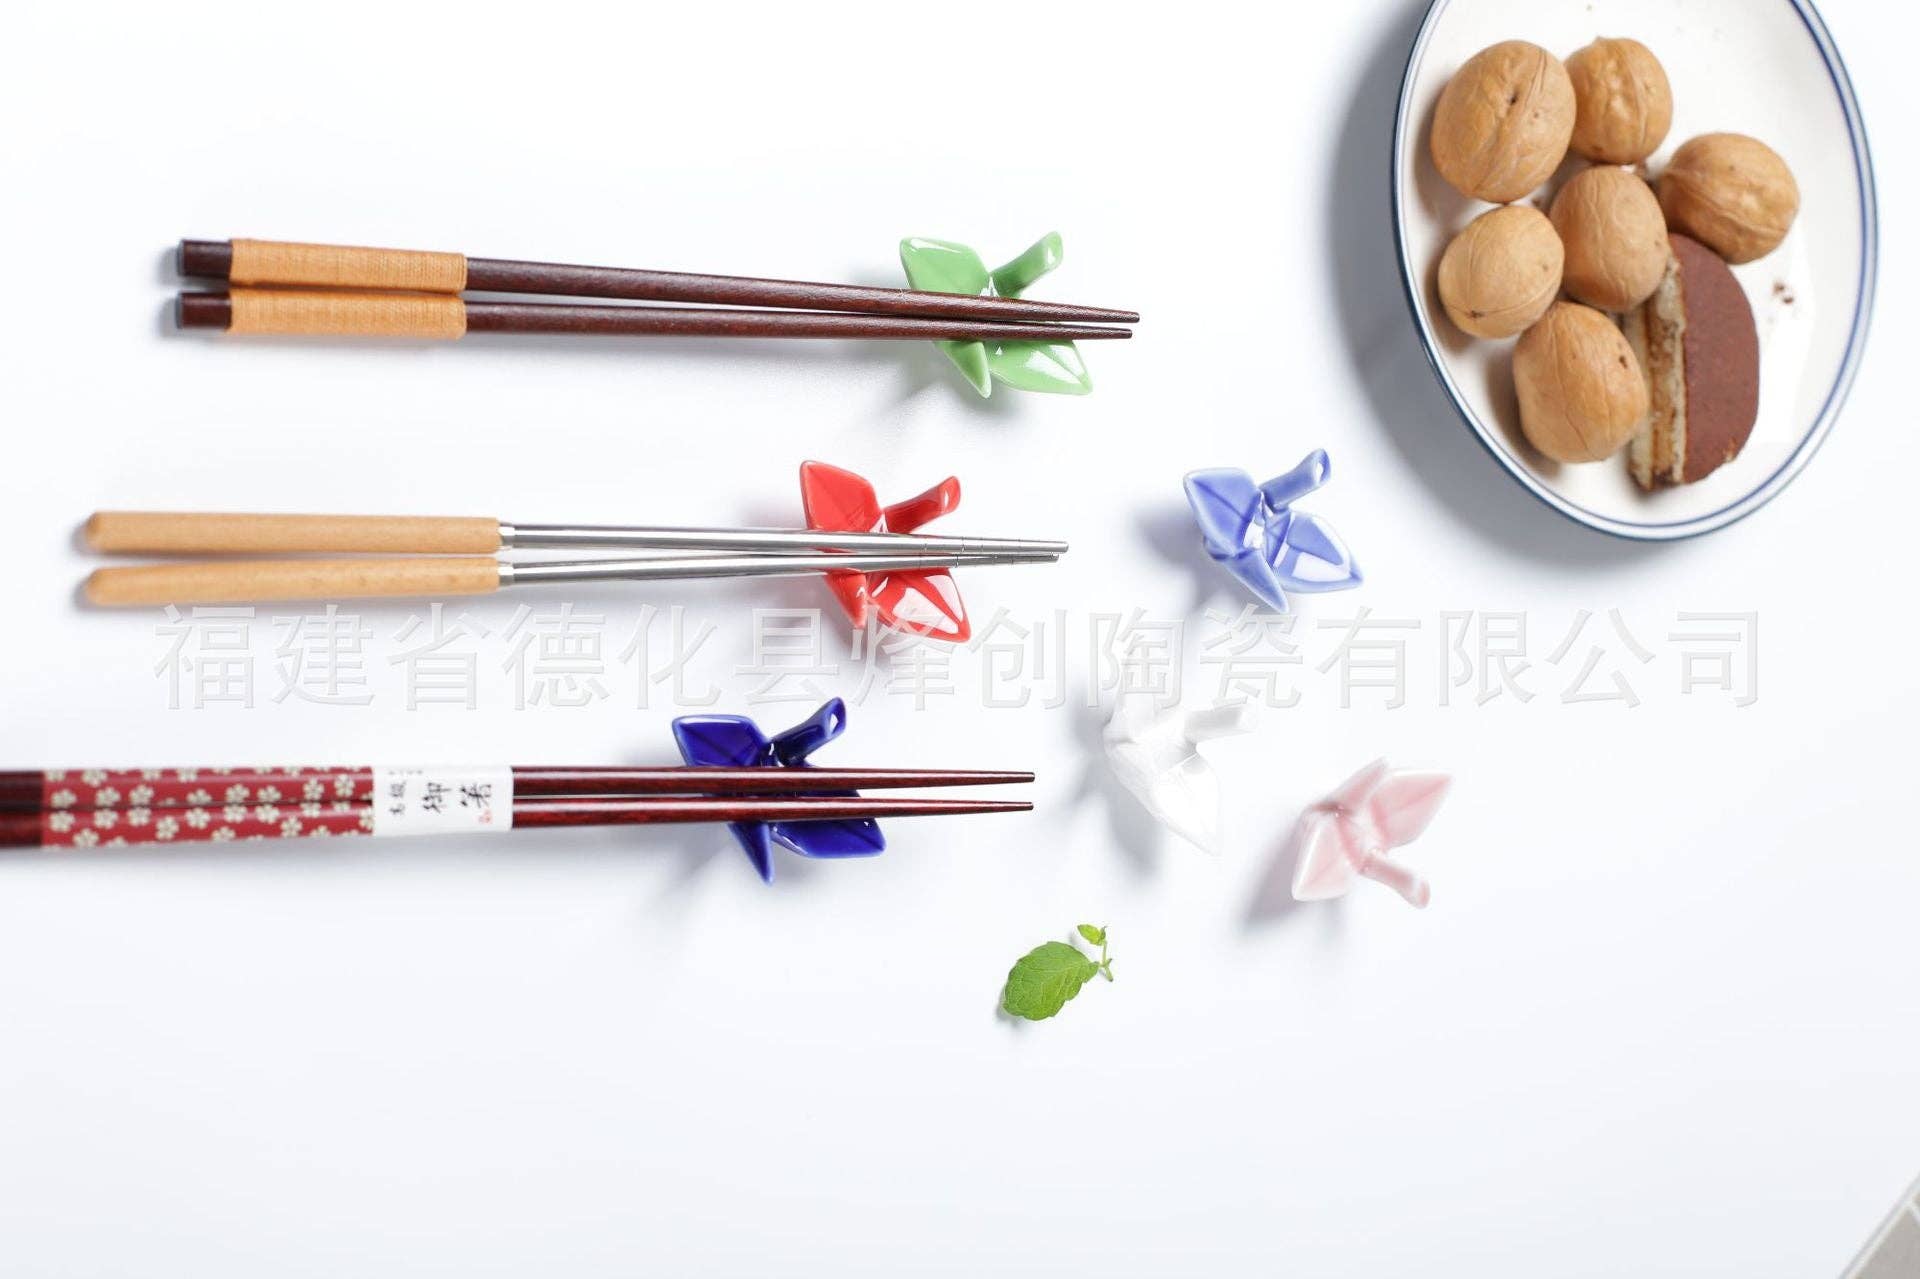 Paper Cranes Chopstick Rest: Mint green